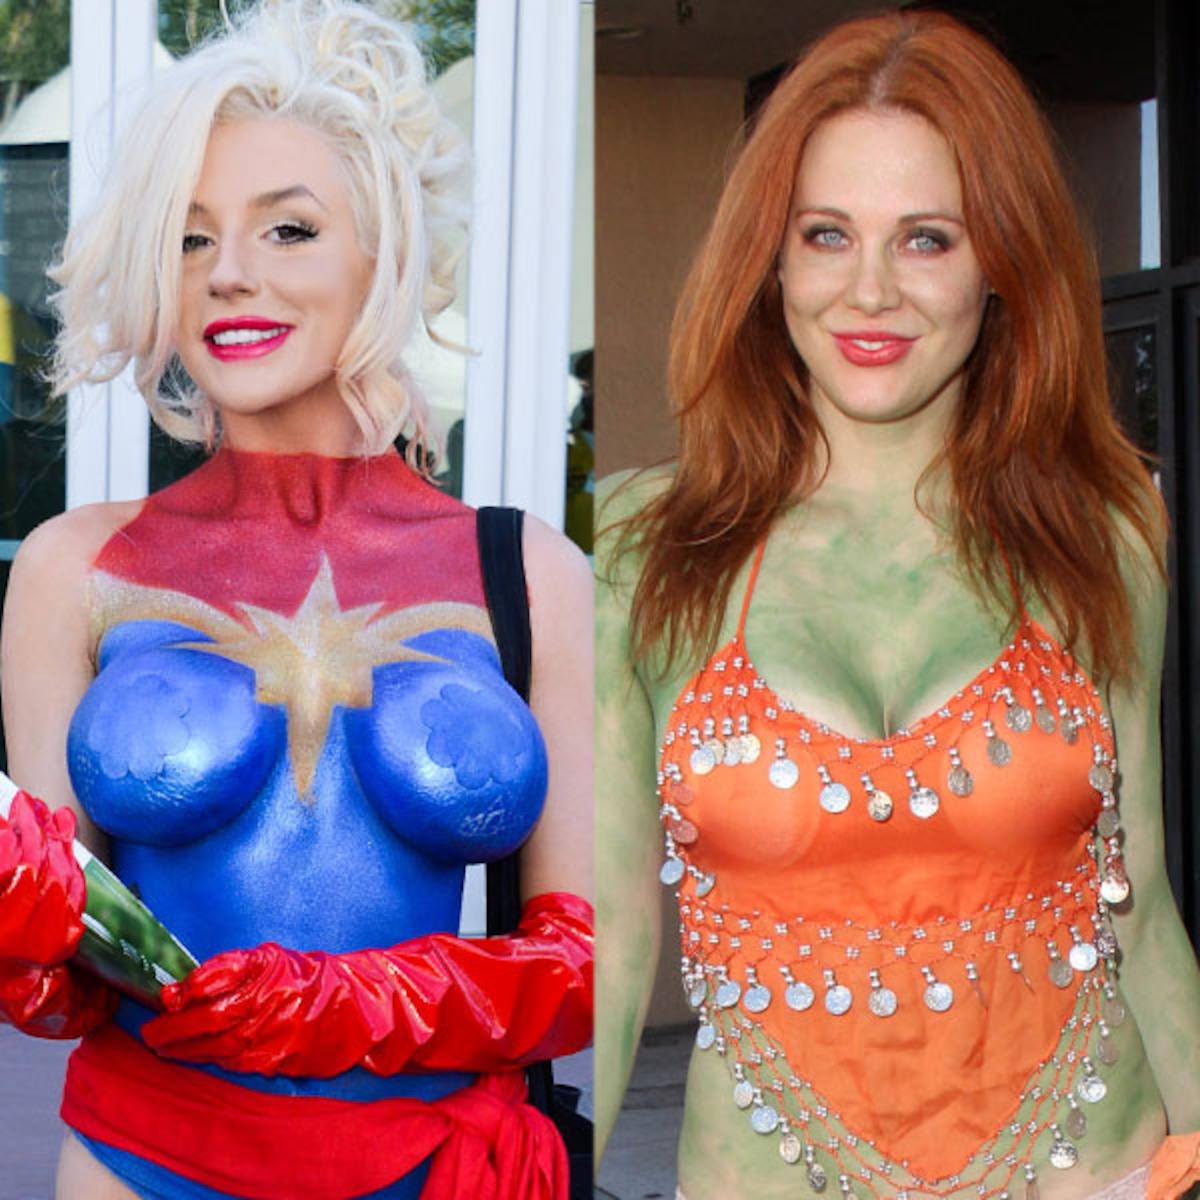 17 amazing bodypaint superhero costumes (definitely nsfw